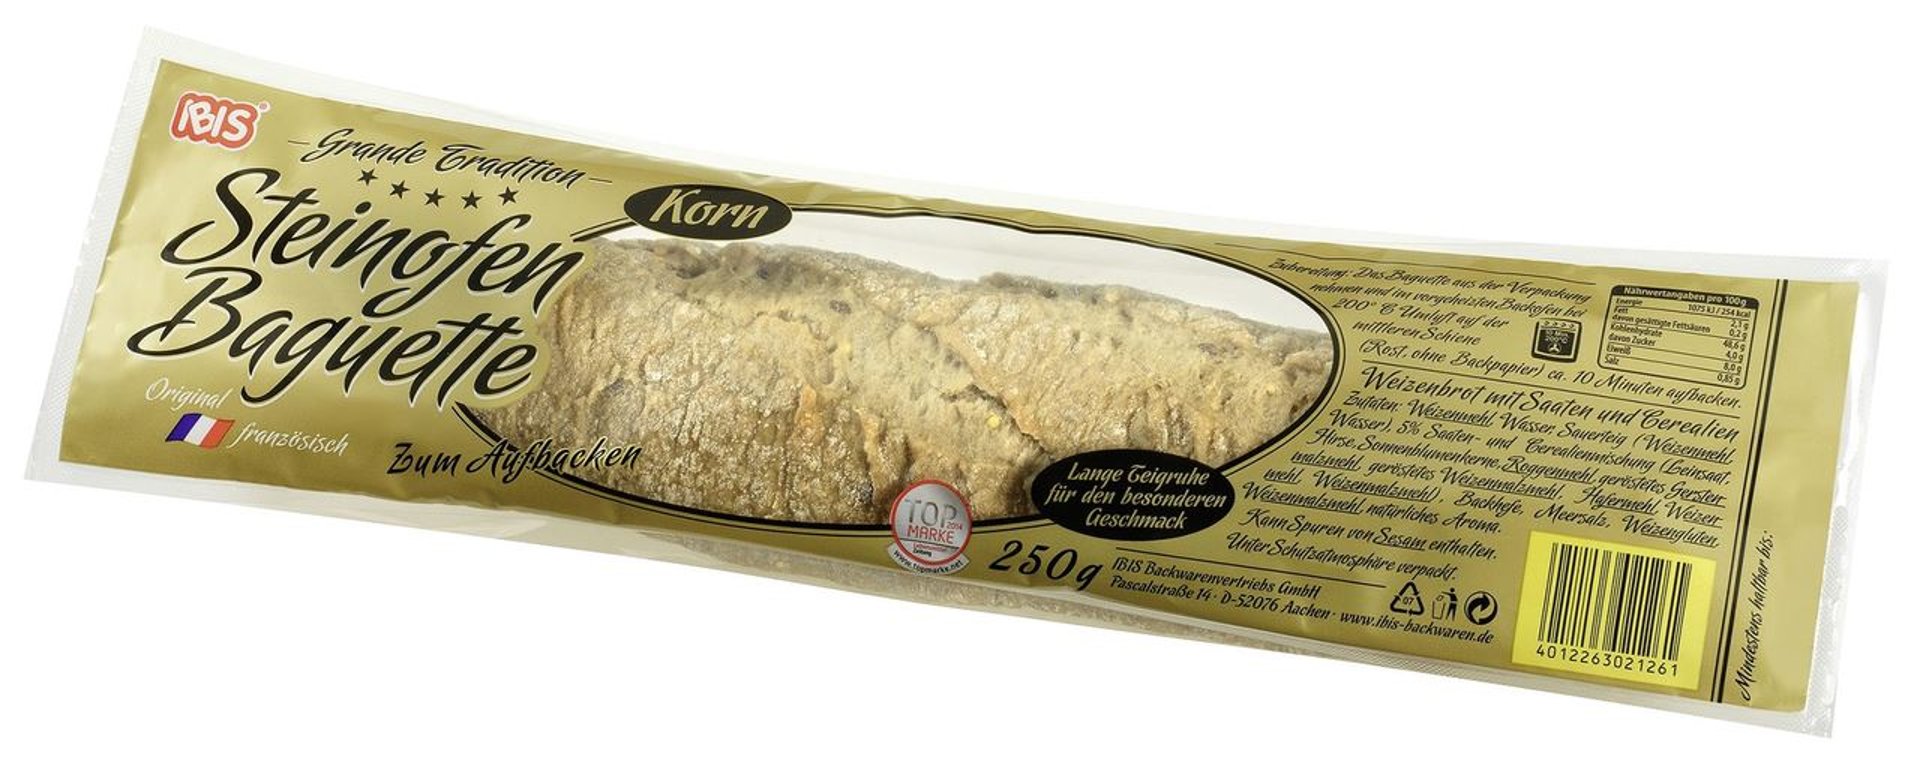 IBIS - Steinofen Baguette Korn vorgebacken ungeschnitten - 1 x 250 g